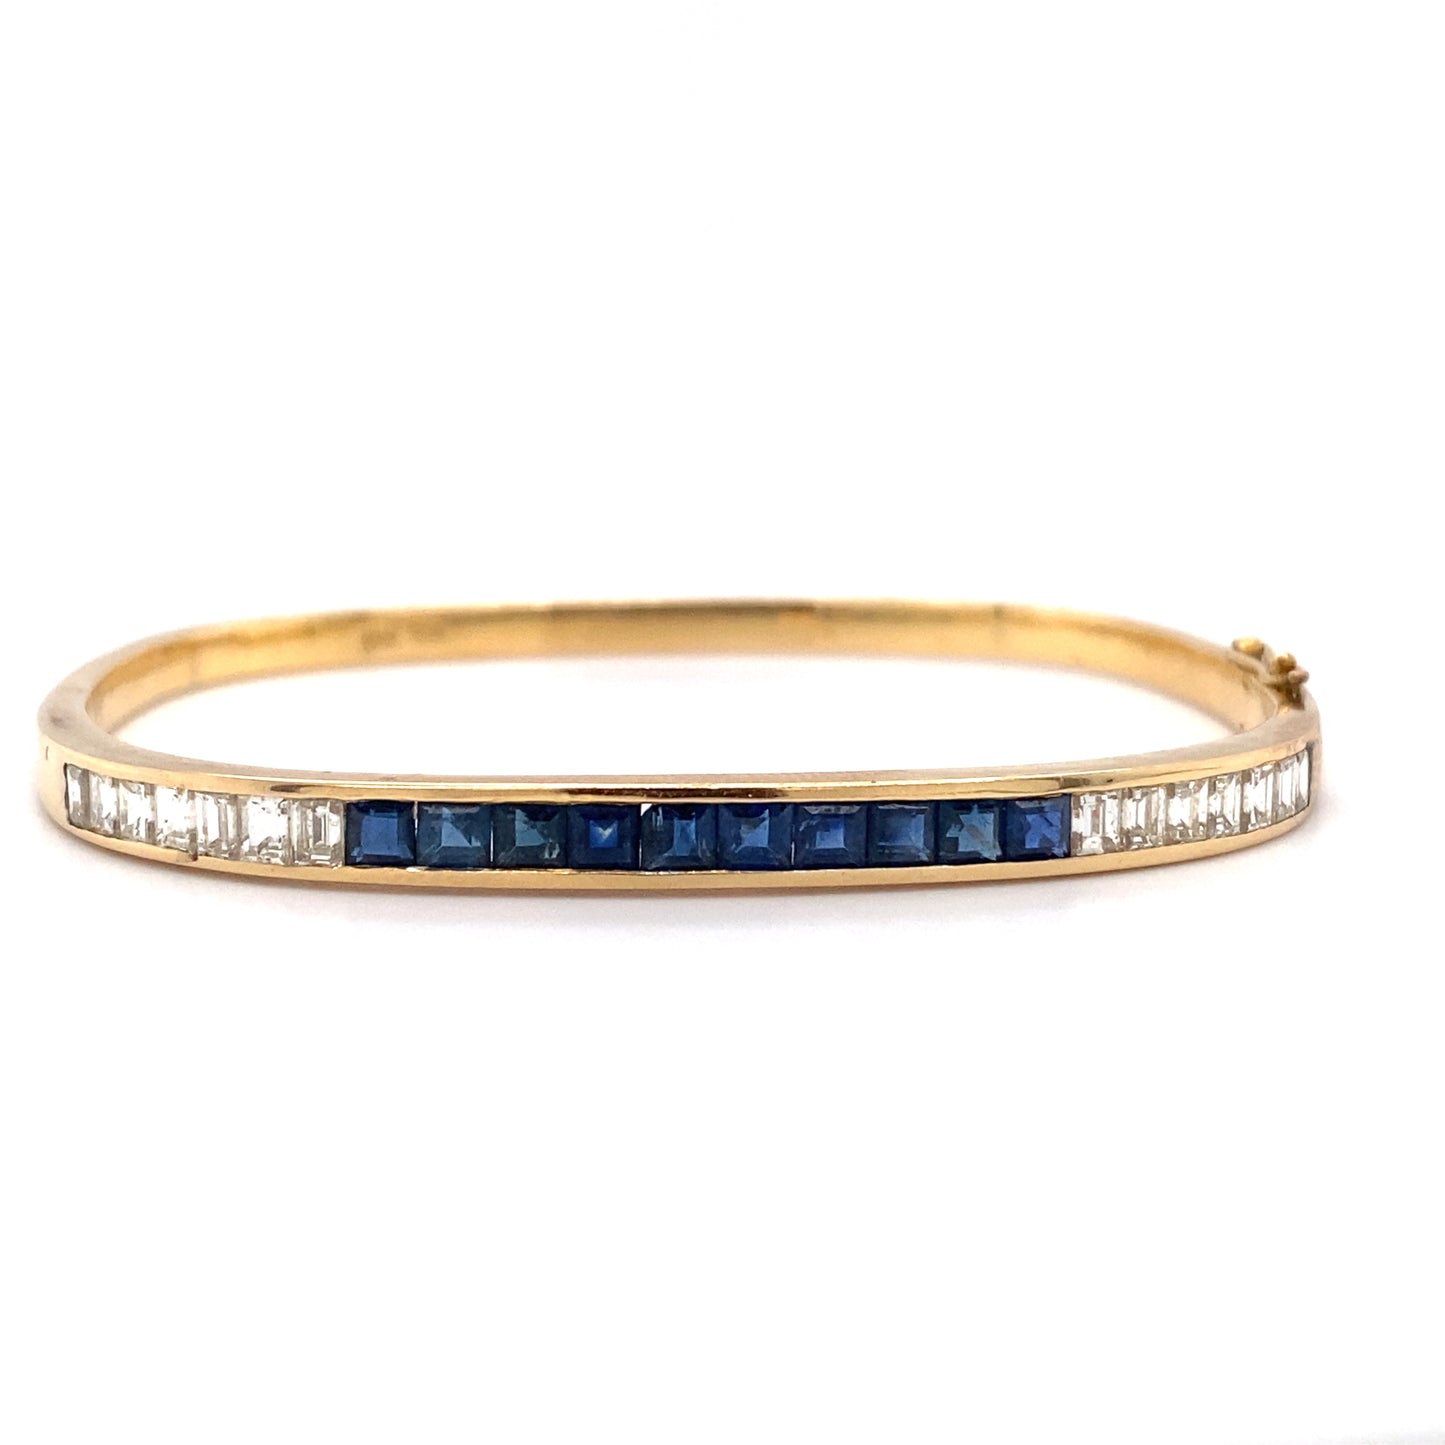 Circa 1950 2.0ct Sapphire and Diamond Hinged Bangle Bracelet